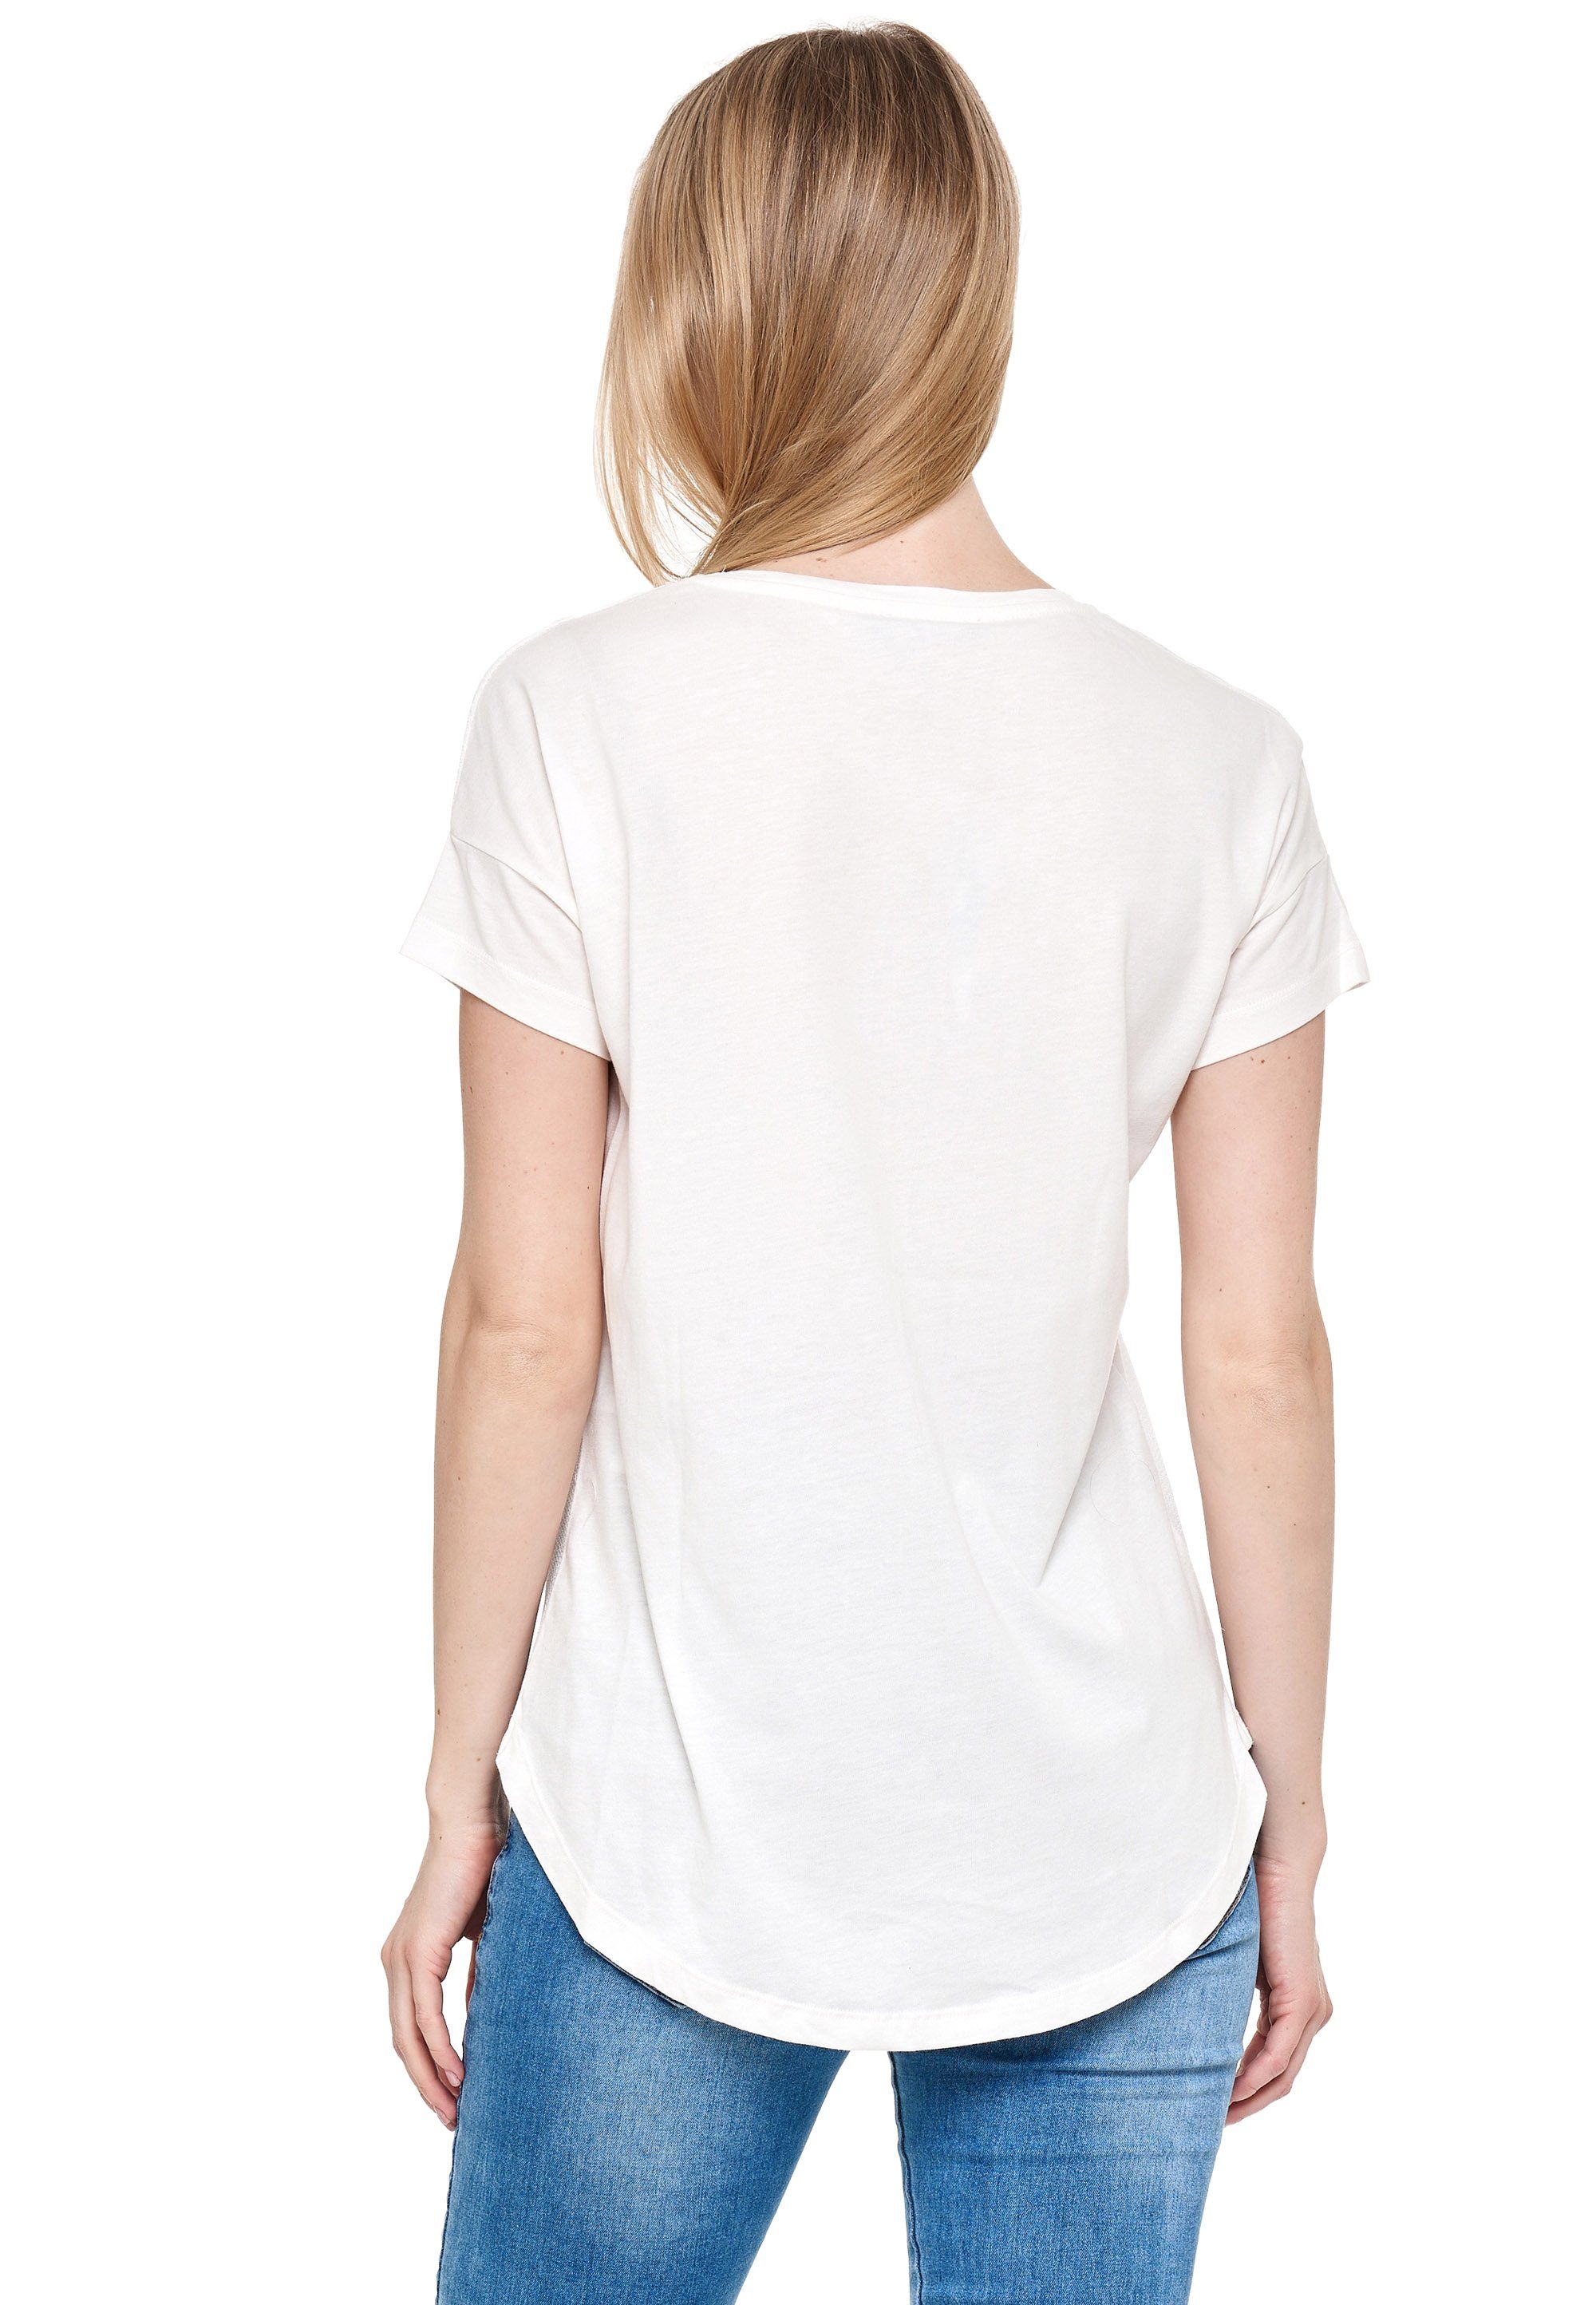 Decay T-Shirt mit stilbewusstem Frontprint weiß